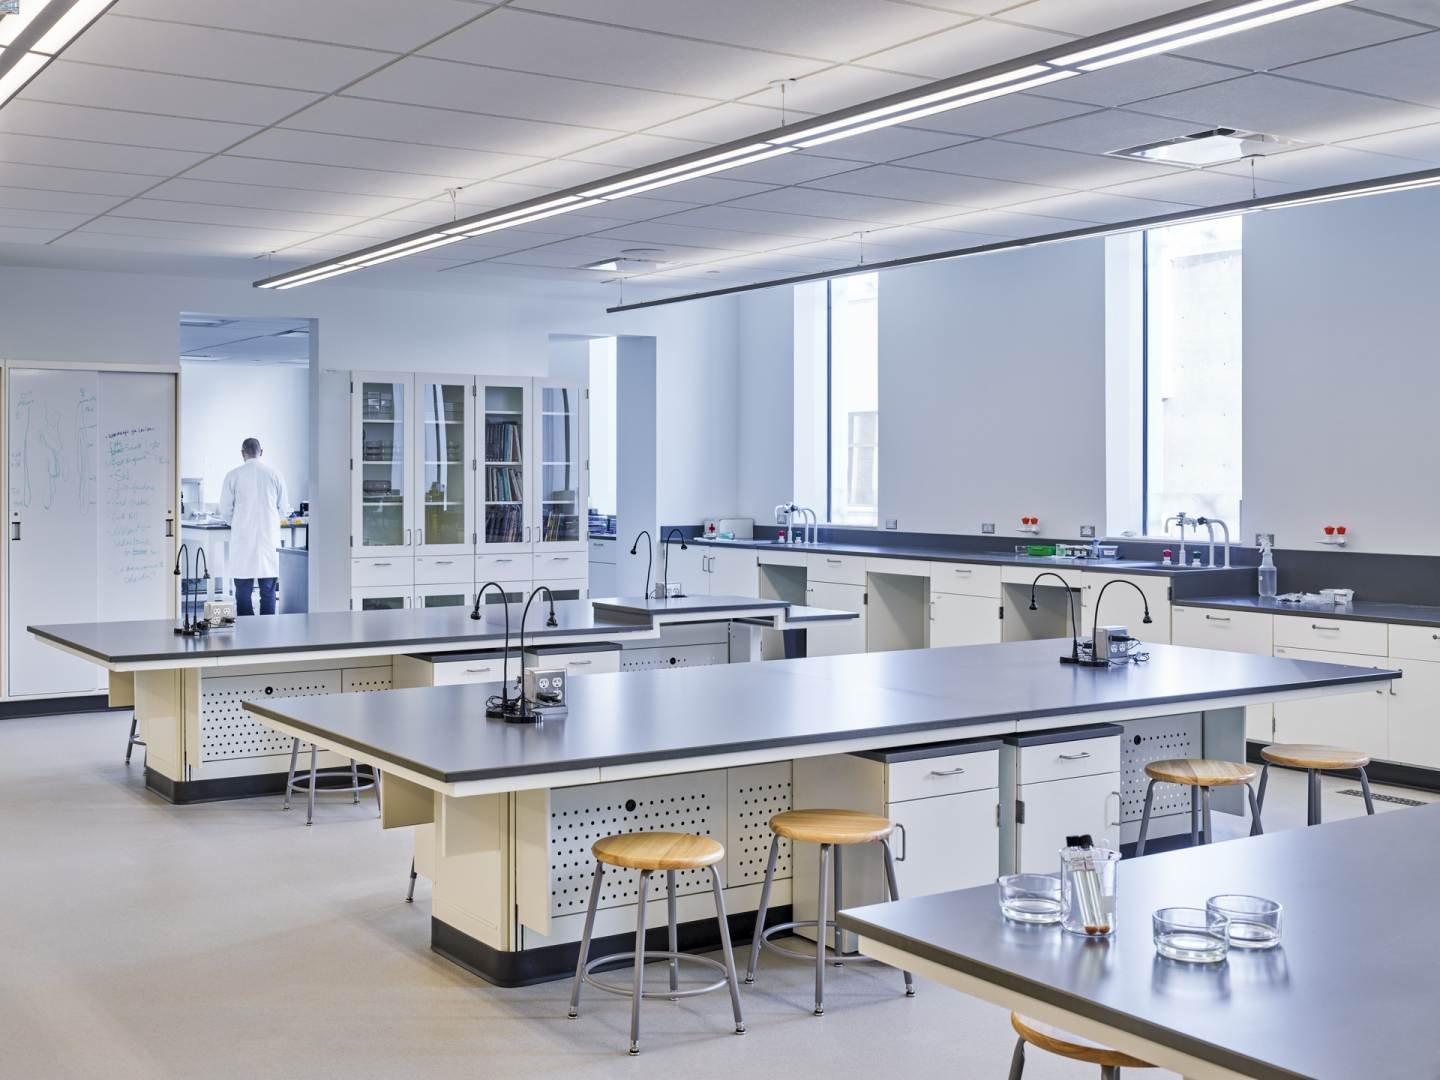 University of British Columbia Undergraduate Life Sciences Teaching Labs Renewal & Expansion 